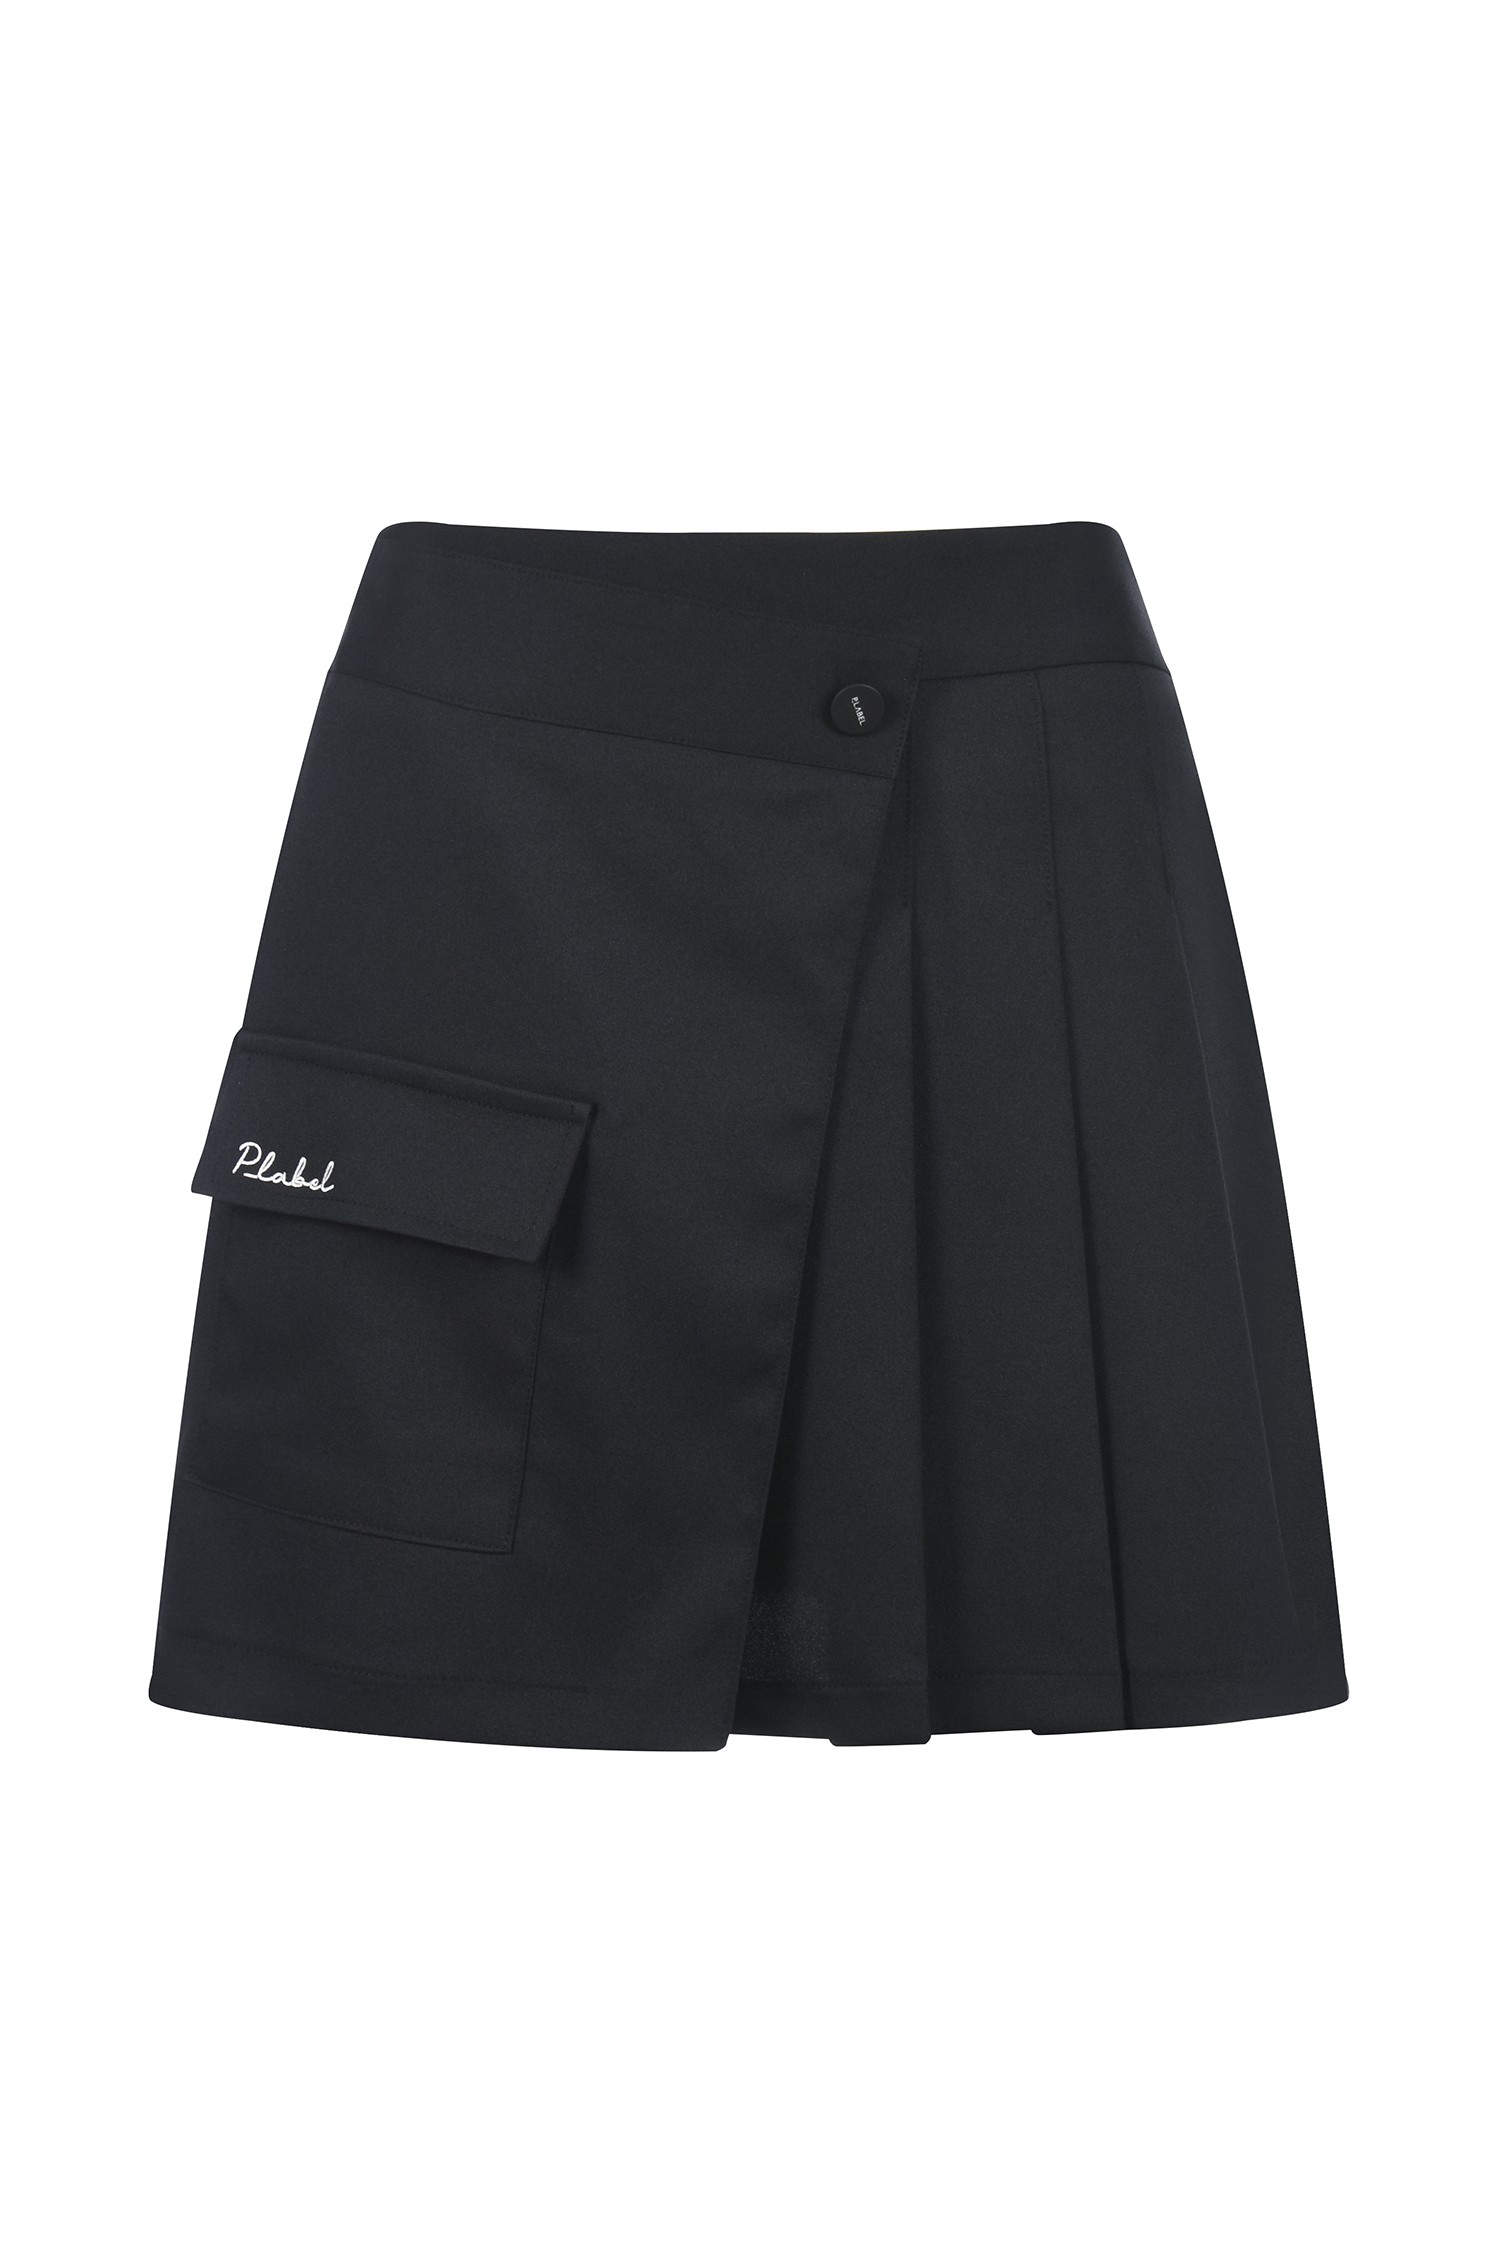 [P_LABEL GOLF] Pocket Pleats Skirt_P_LABEL GOLF